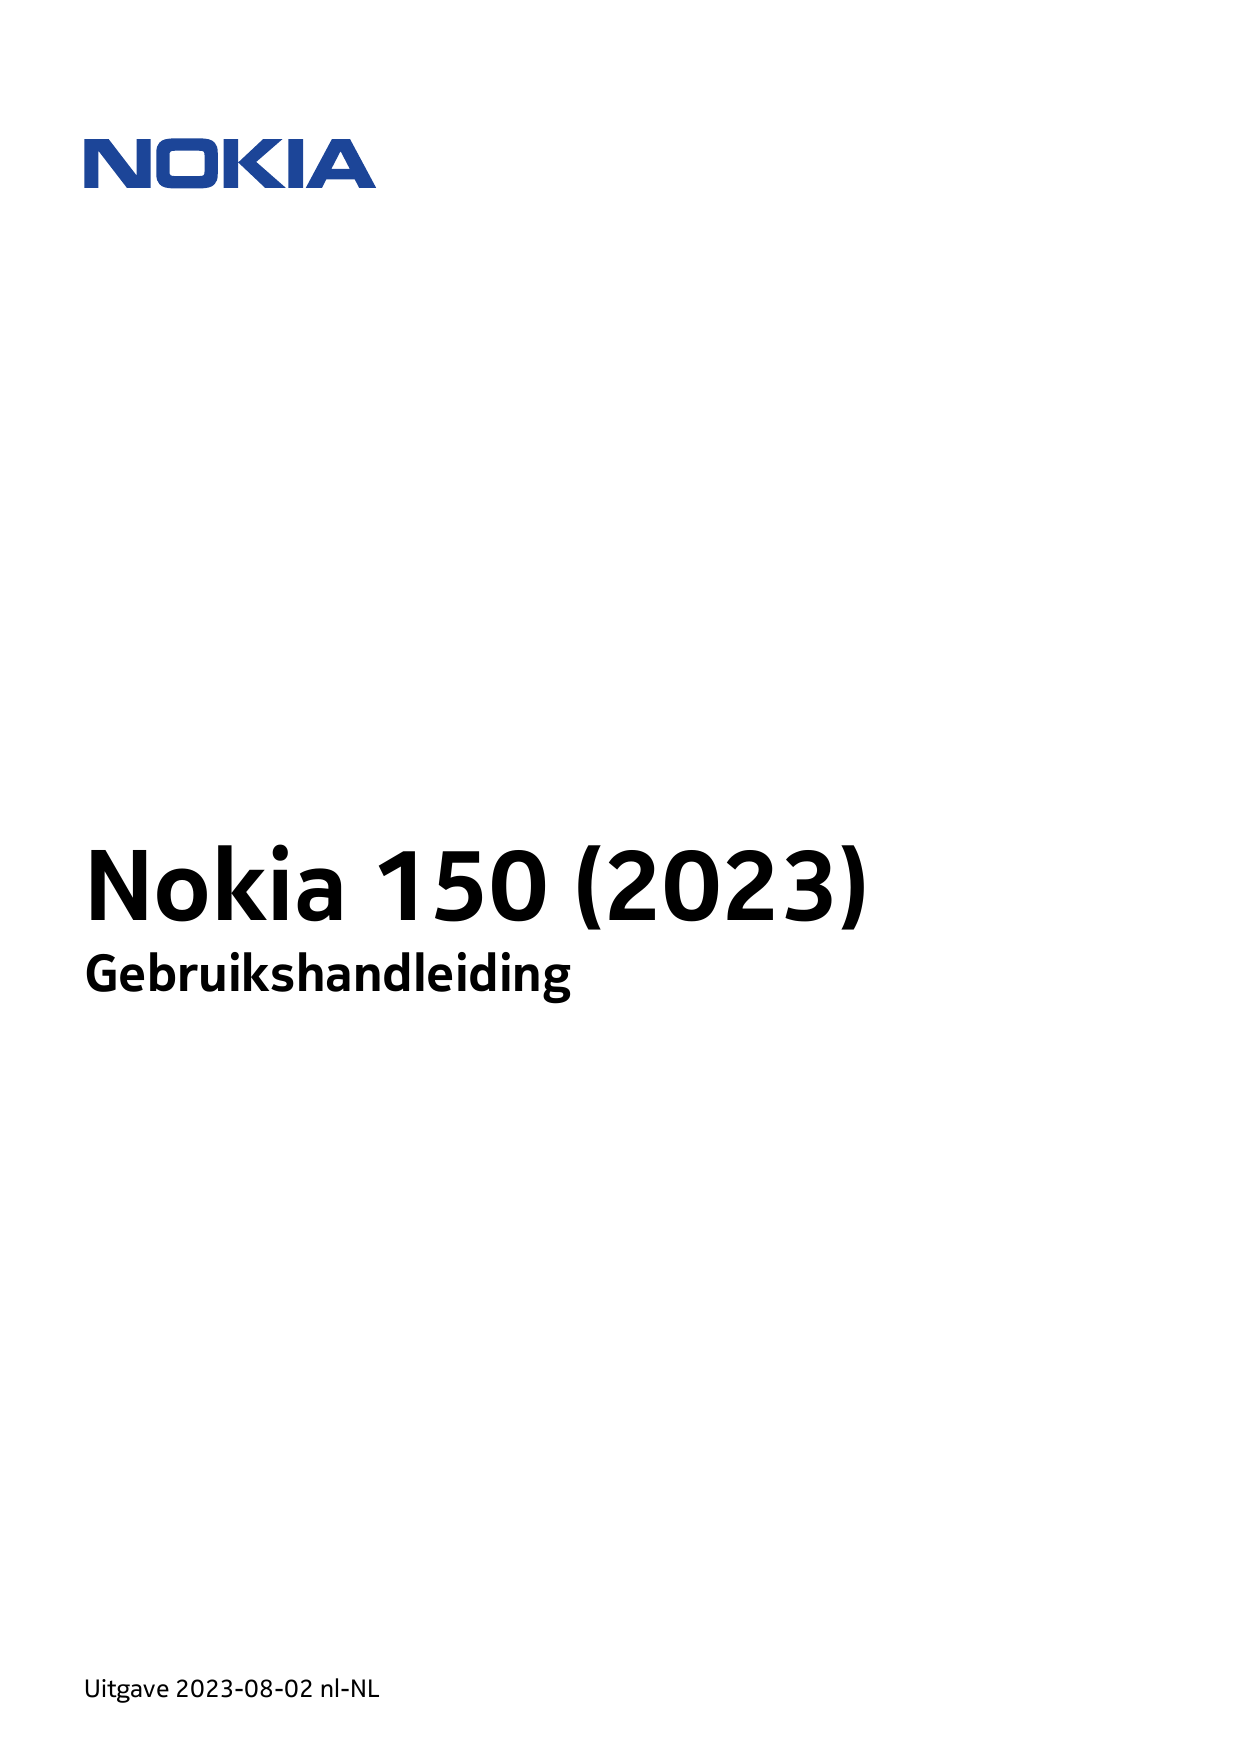 Nokia 150 (2023)GebruikshandleidingUitgave 2023-08-02 nl-NL